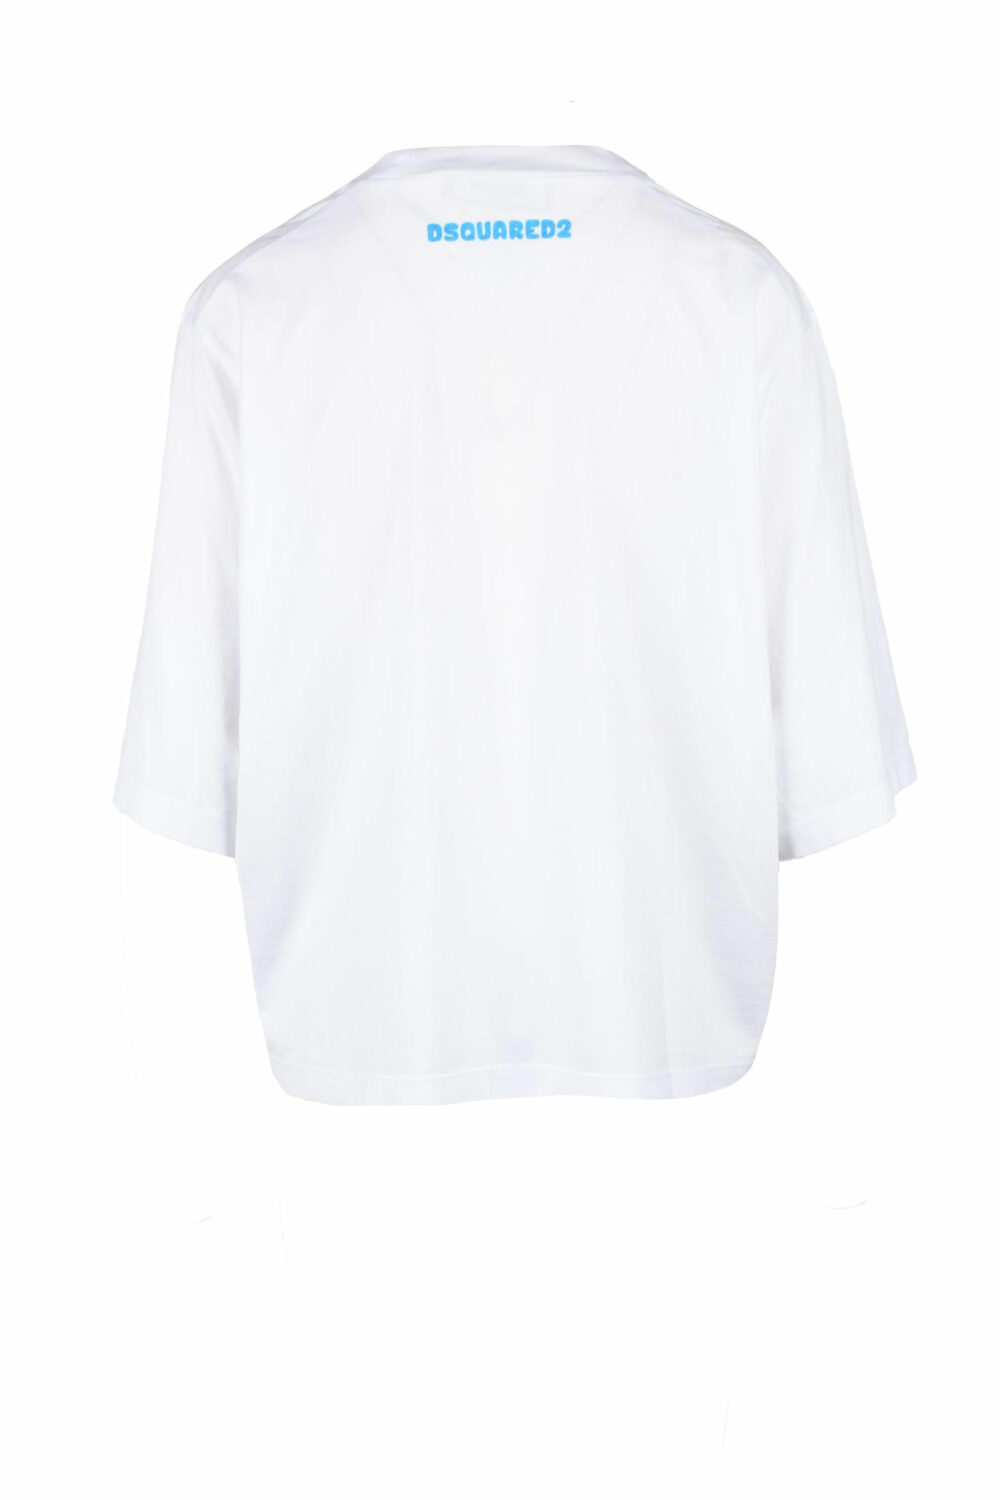 T-shirt Dsquared2 Bianco - Foto 2